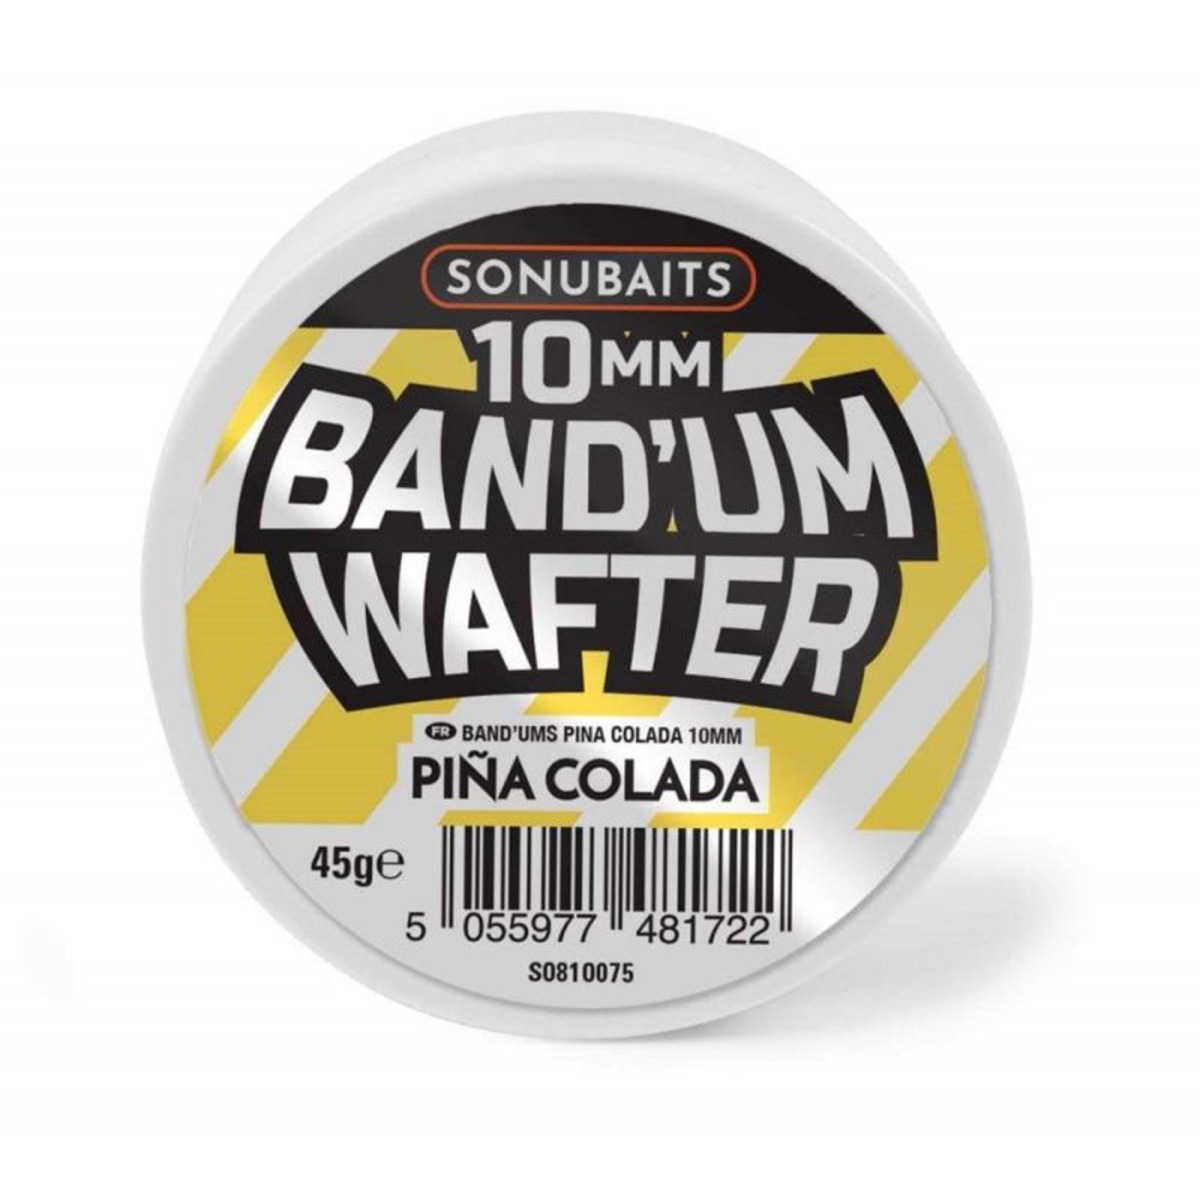 Sonubaits Band’um Wafters - 10 mm - Pina Colada